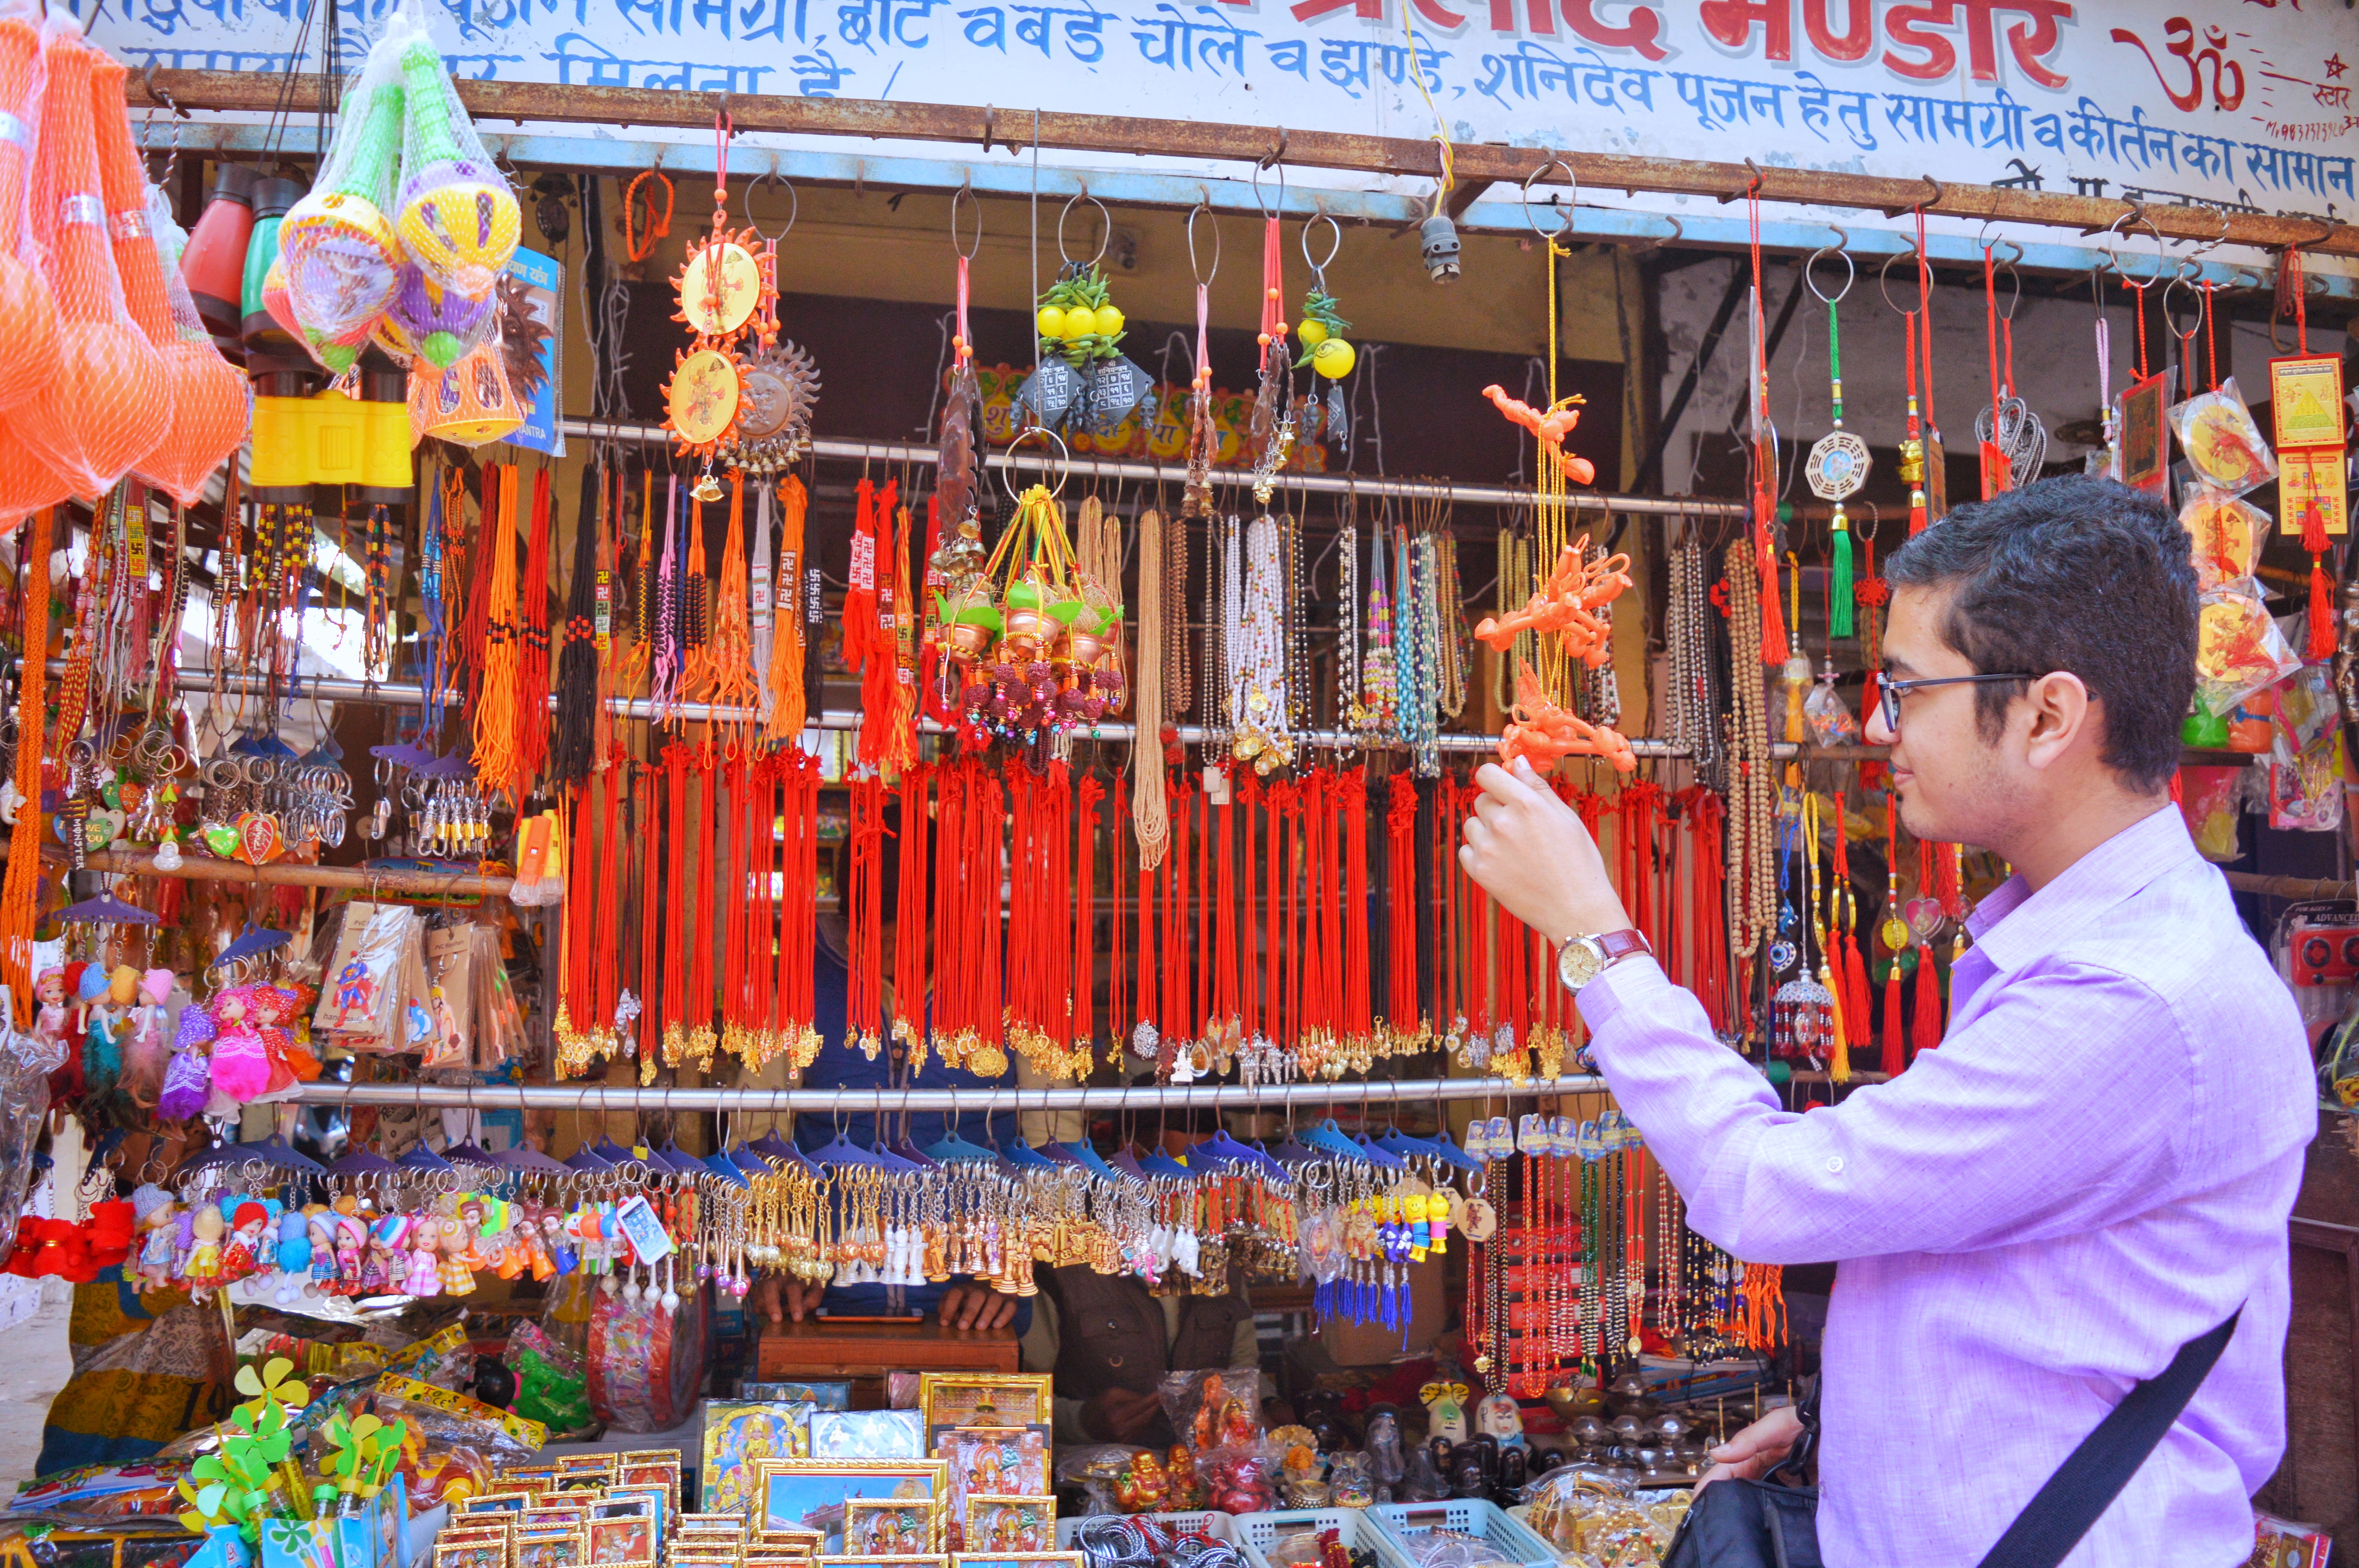 Sidhbali Mandir, Kotdwar, Market